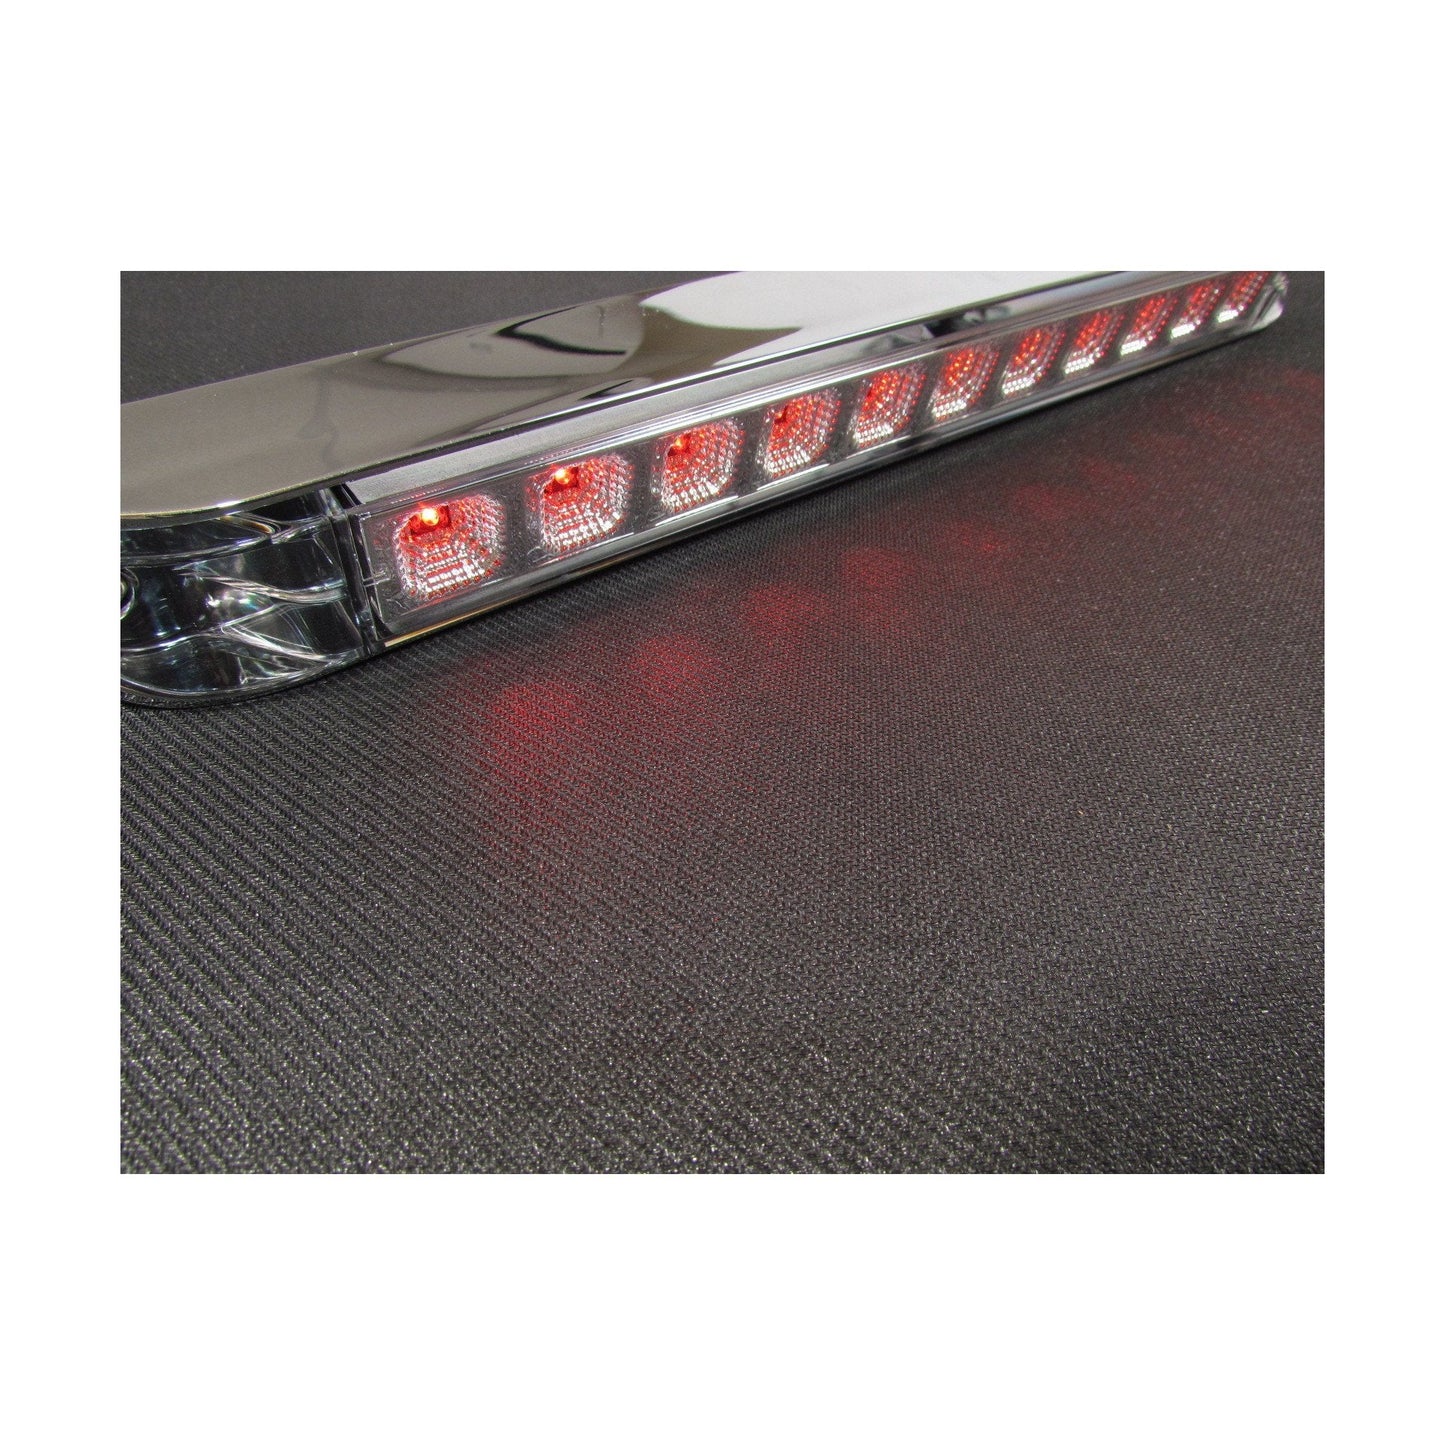 17-6/8" X 2-1/8" Amber Led Light Bar With 11 Leds, Clear Lens And Chrome Bezel | F235253